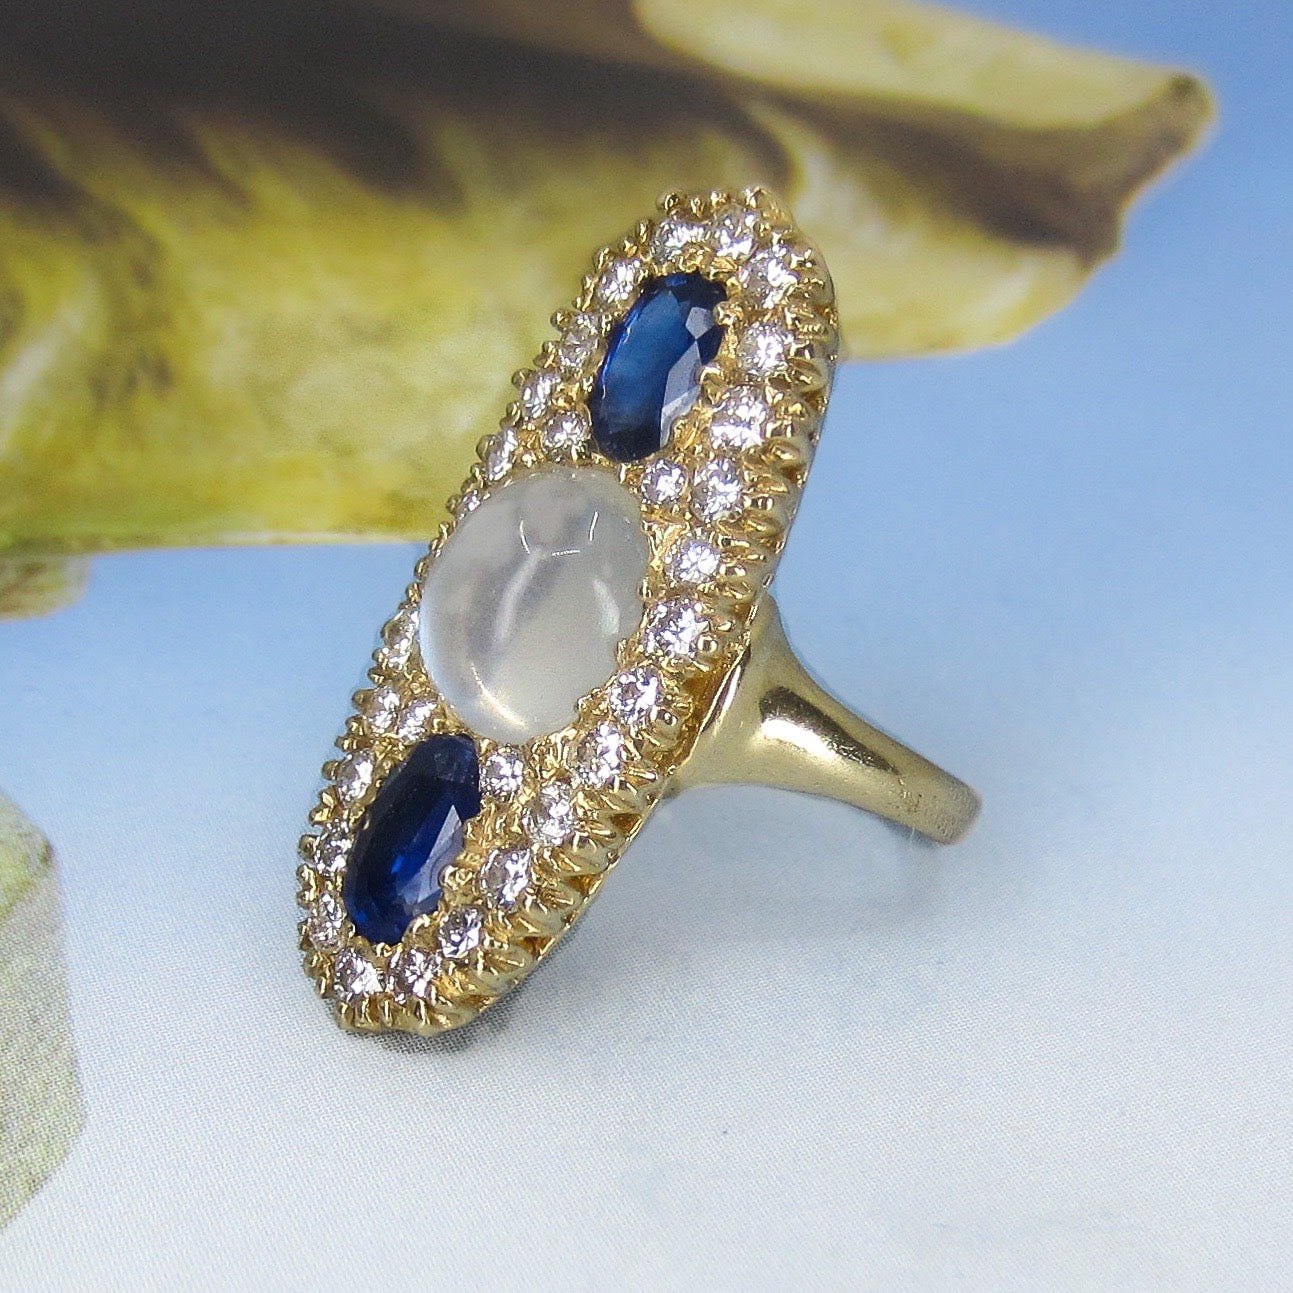 SOLD--Vintage Insane Moonstone, Sapphire and Diamond Navette Ring 14k c. 1950